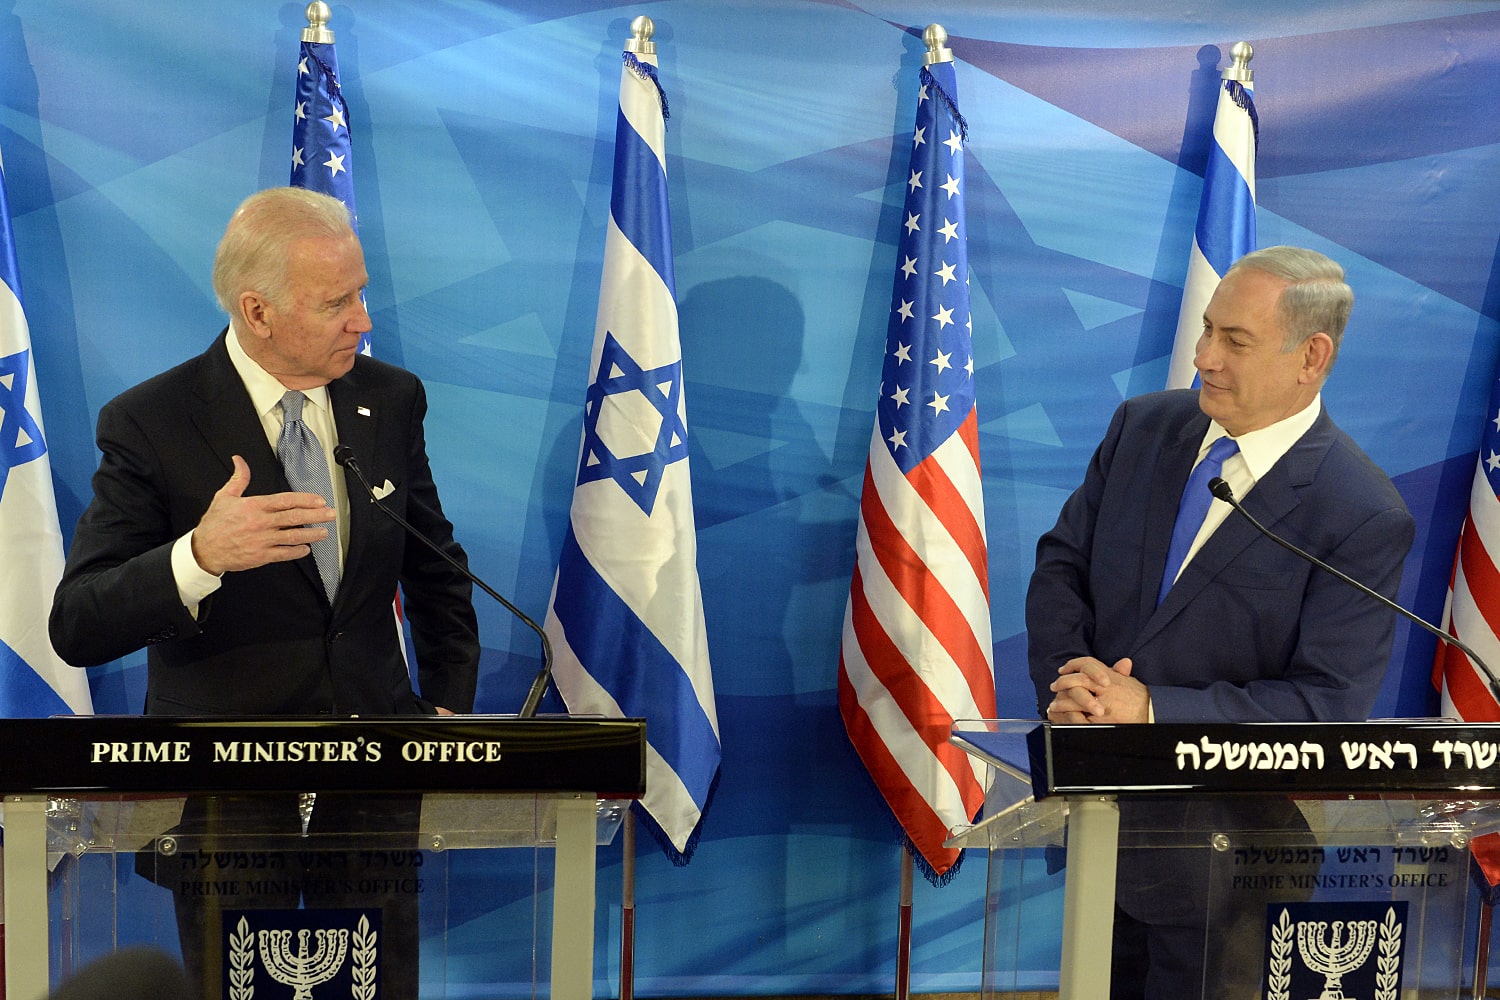 Biden Netanyahu Image U.S. Embassy Tel Aviv Wikimedia Commons min